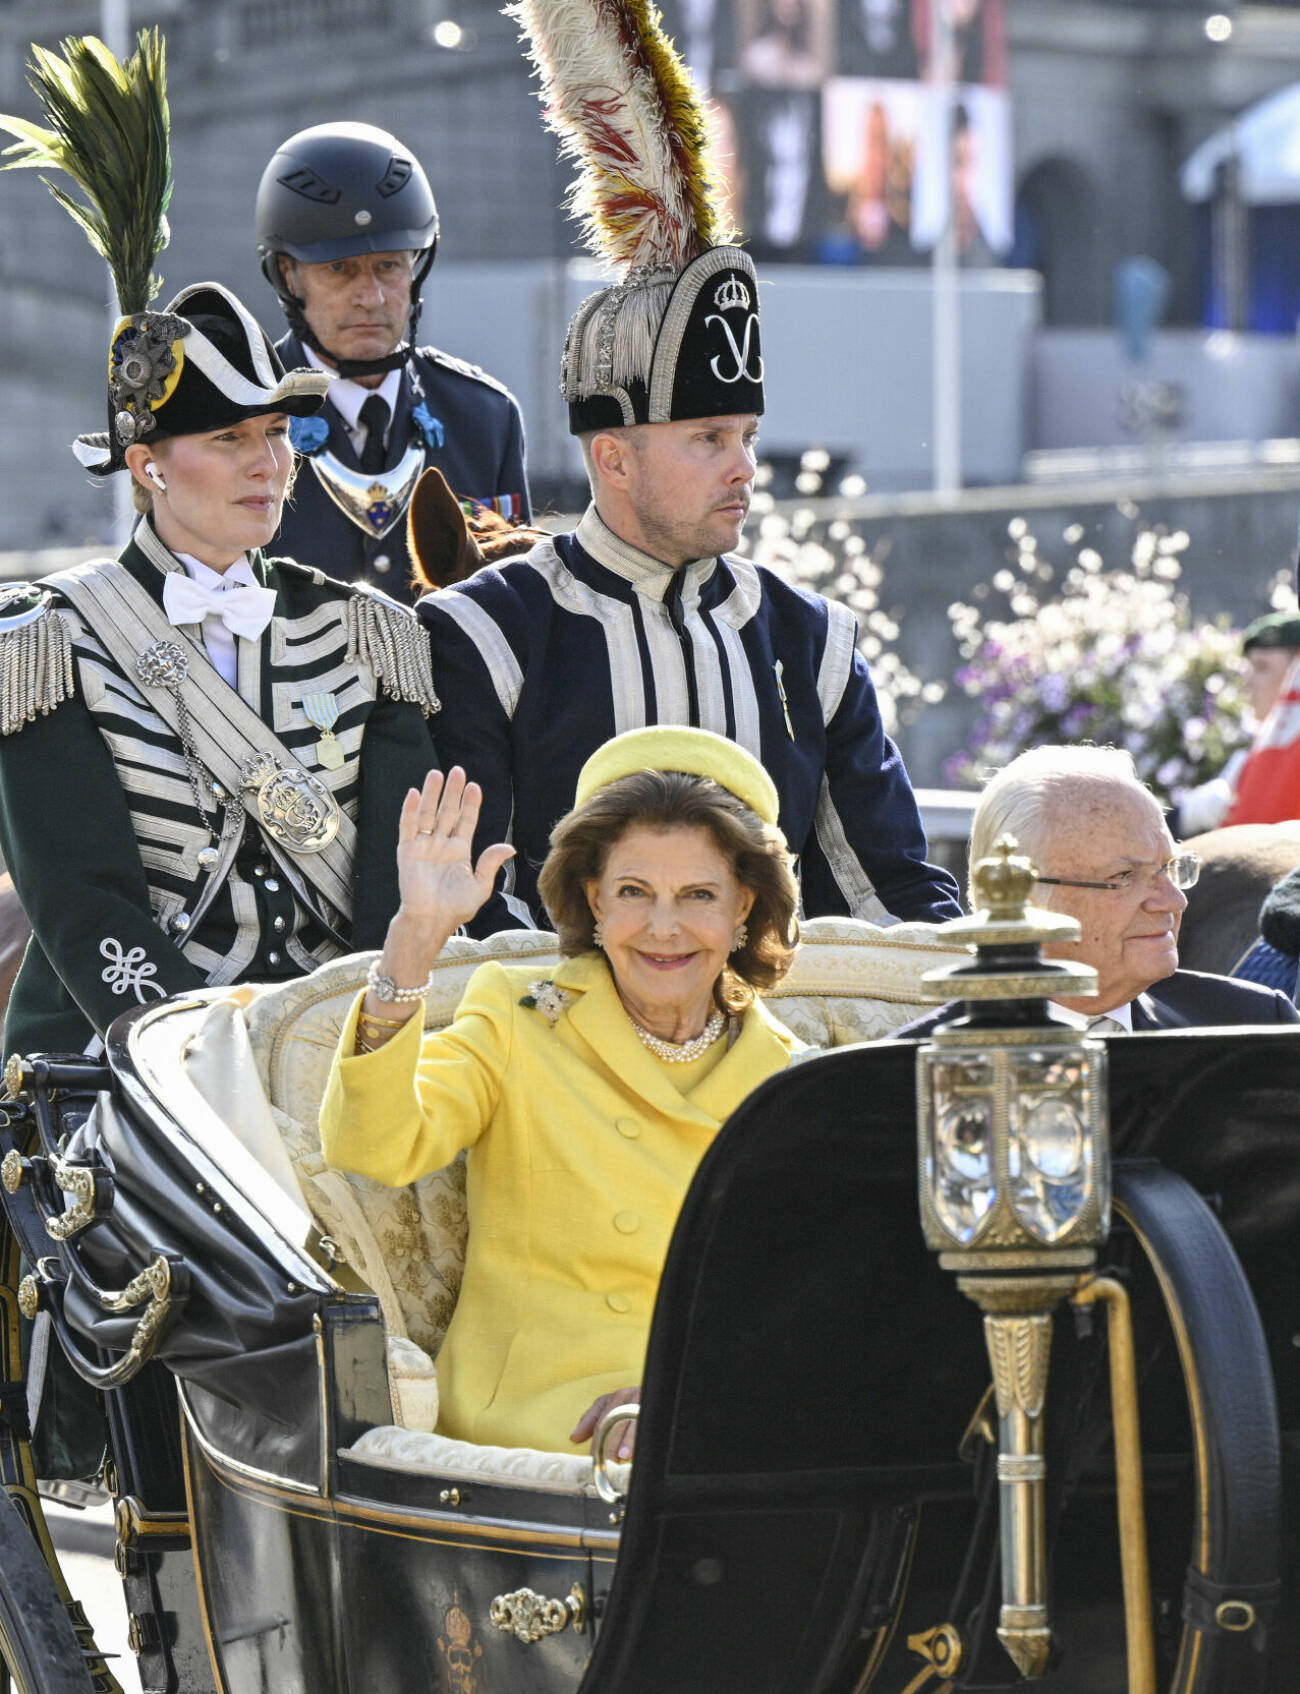 Kungaparet åker kortege i Stockholm under finalen av kungens j50 år på tronen